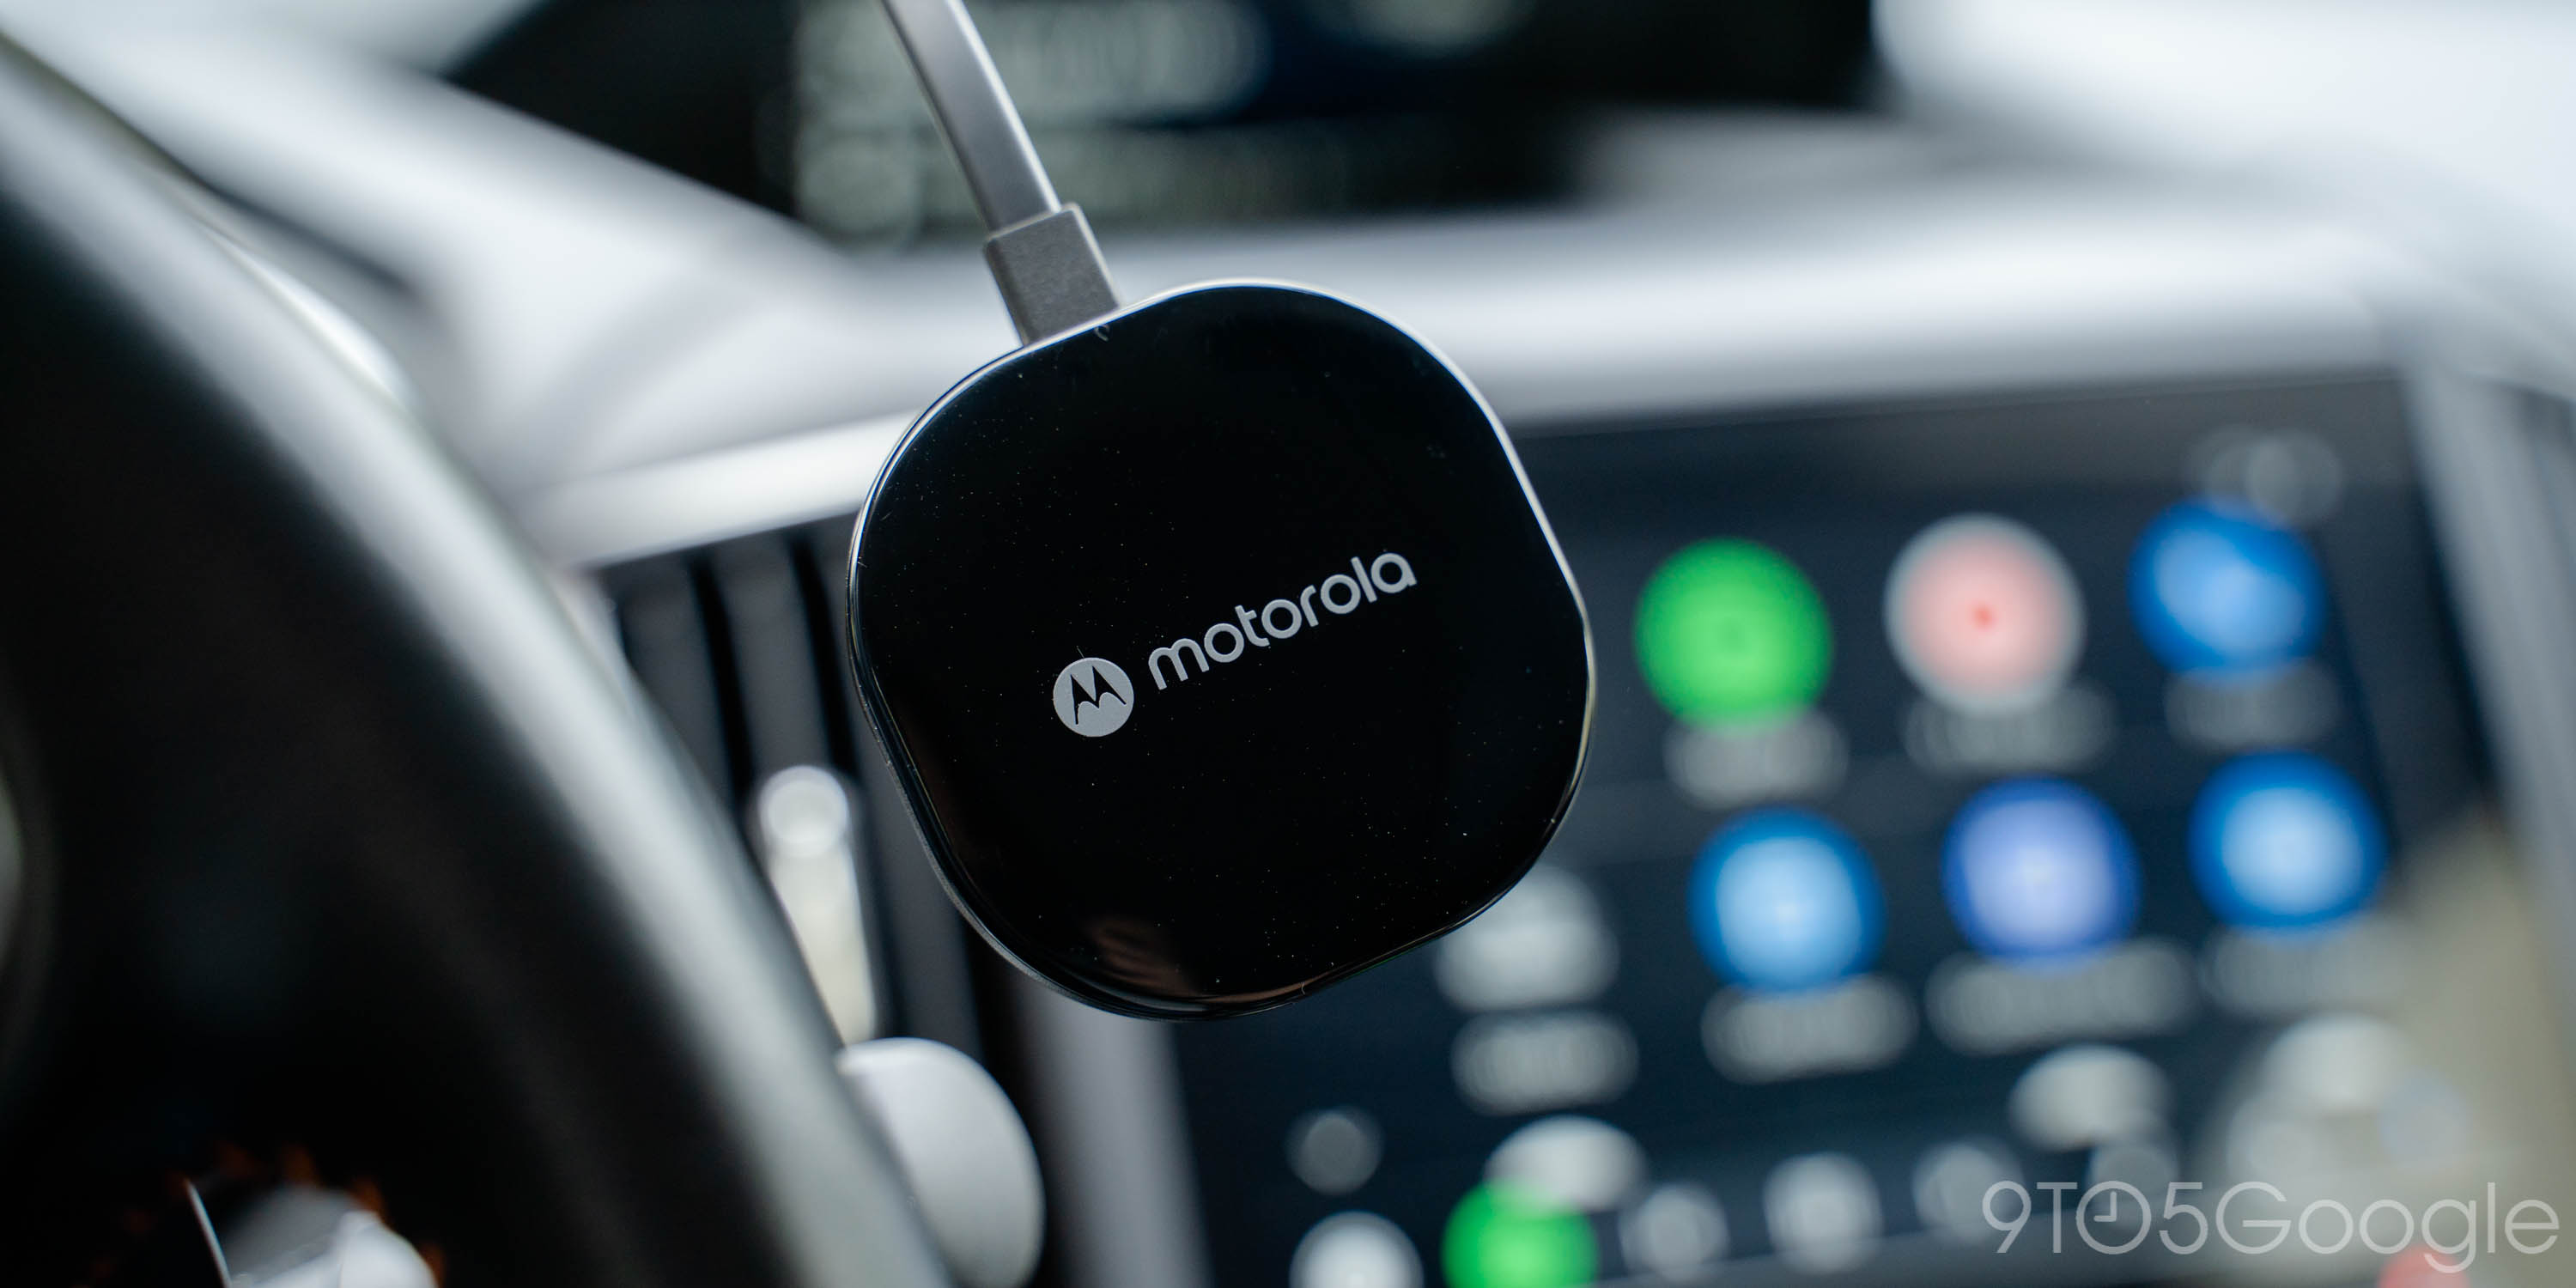 Motorola MA1 Wireless Android Auto Car Adapter Unit